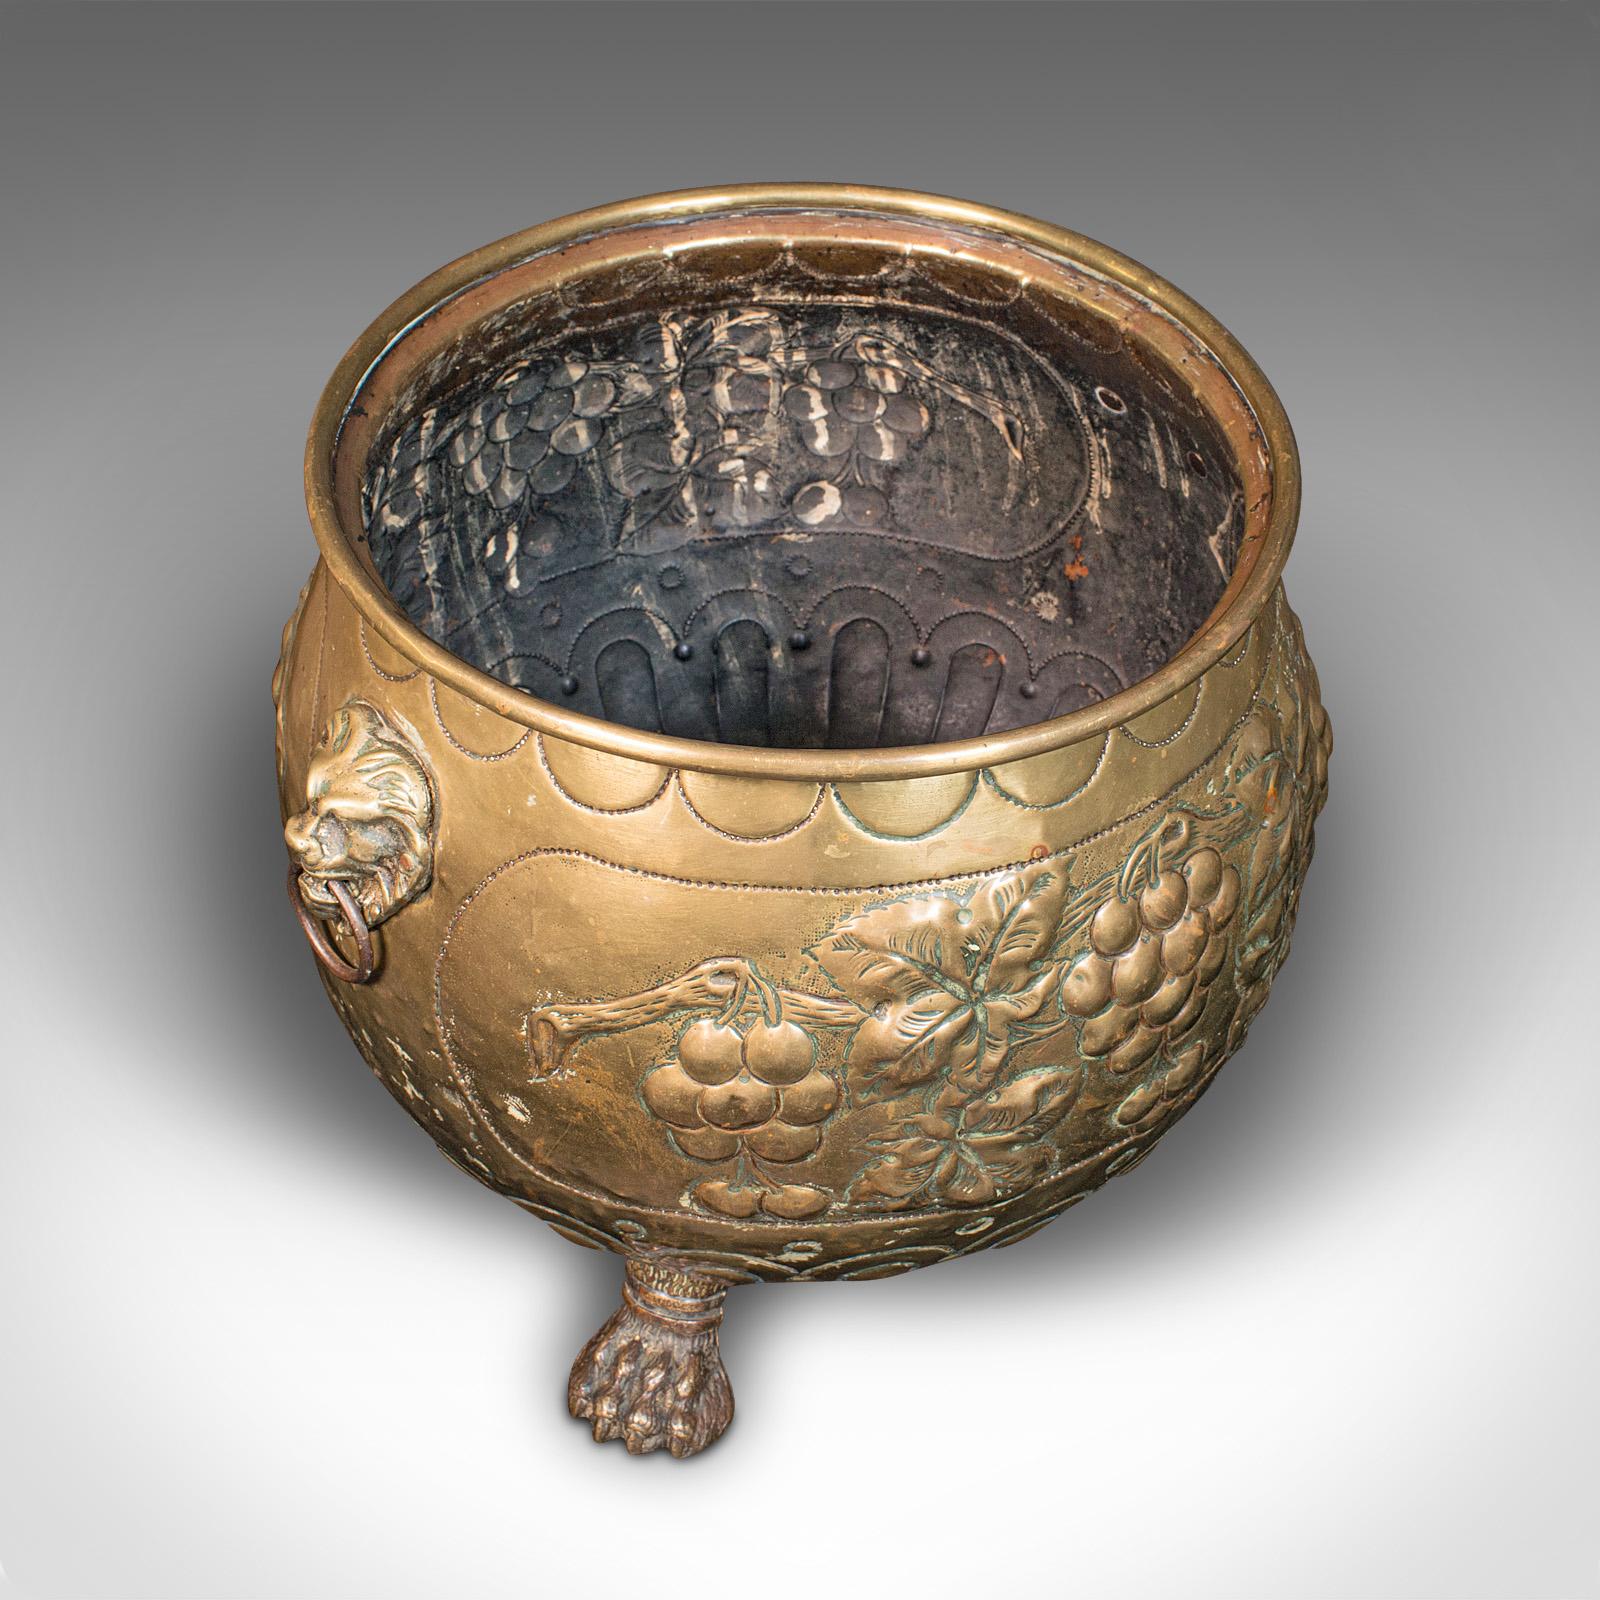 Antique Decorative Fireside Bin, English, Brass, Fire Bucket, Georgian, c.1800 For Sale 1